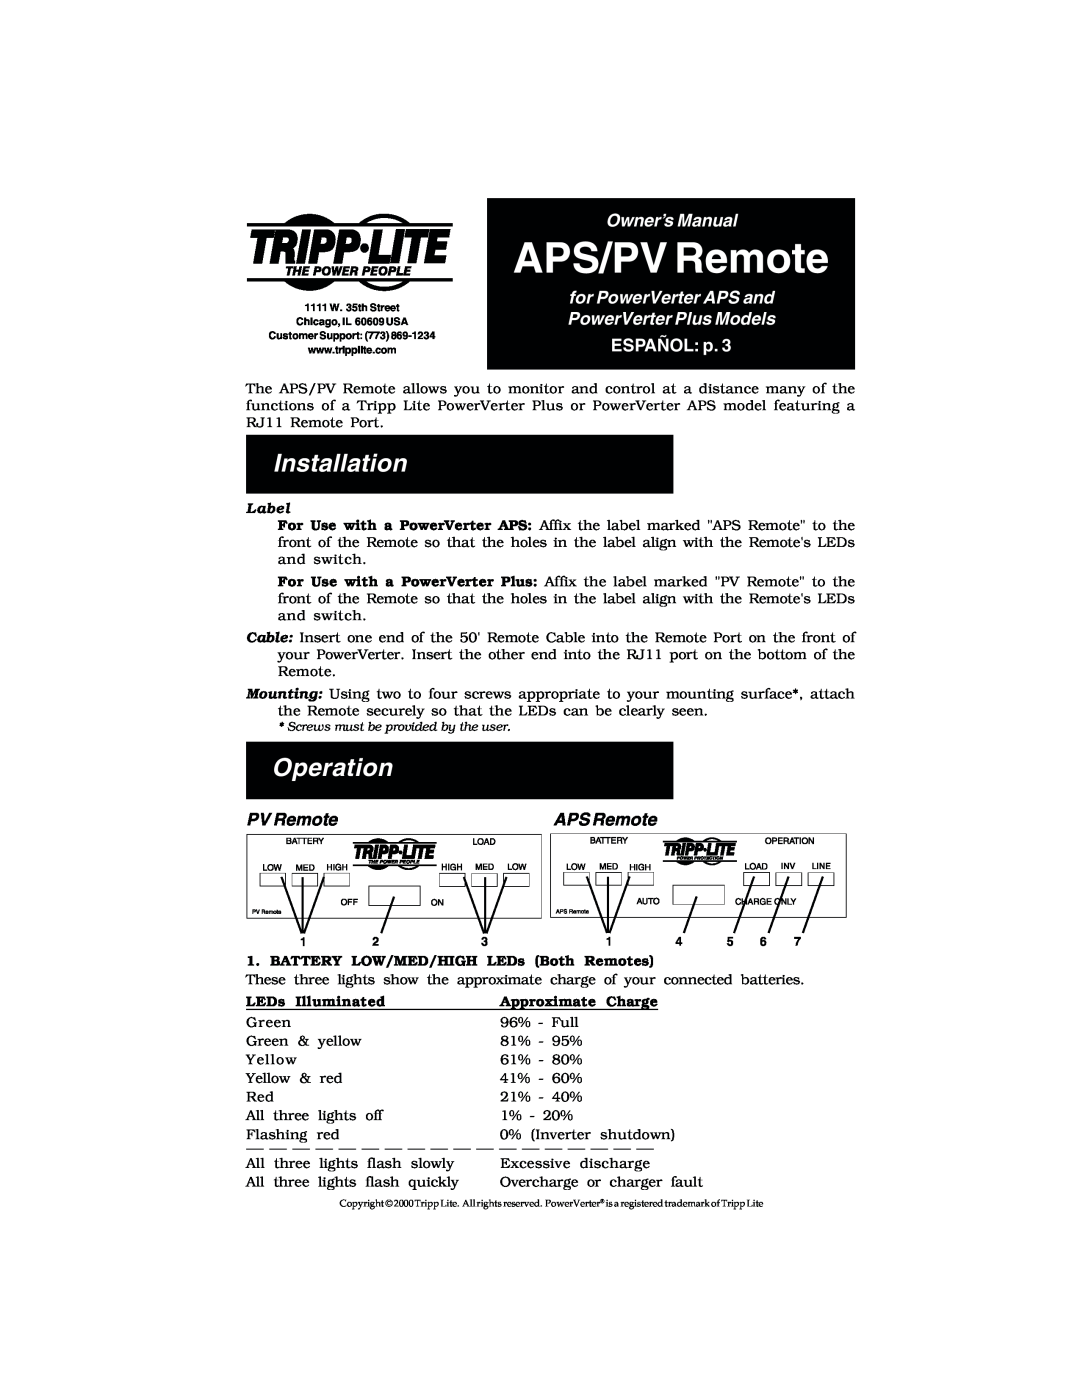 Tripp Lite owner manual APS/PV Remote, Installation, Operation, Owner’s Manual, APS Remote, ESPAÑOL p, Label 